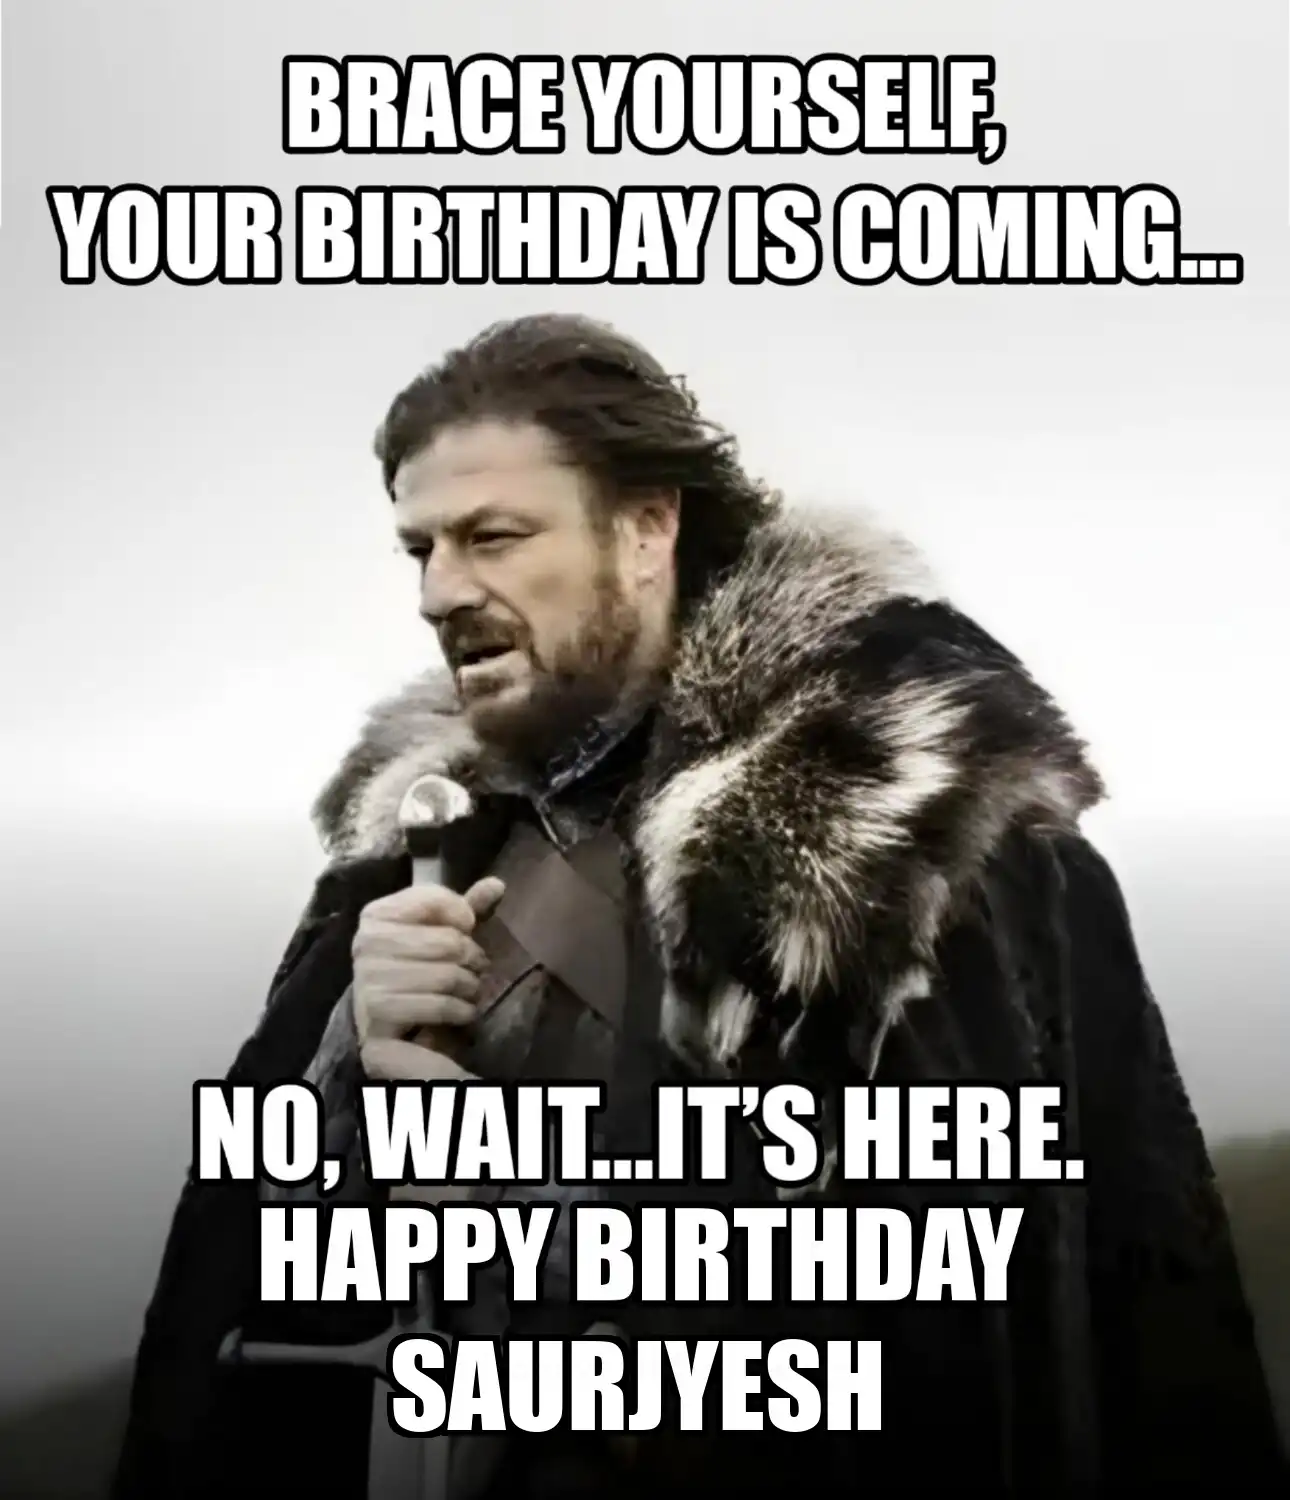 Happy Birthday Saurjyesh Brace Yourself Your Birthday Is Coming Meme